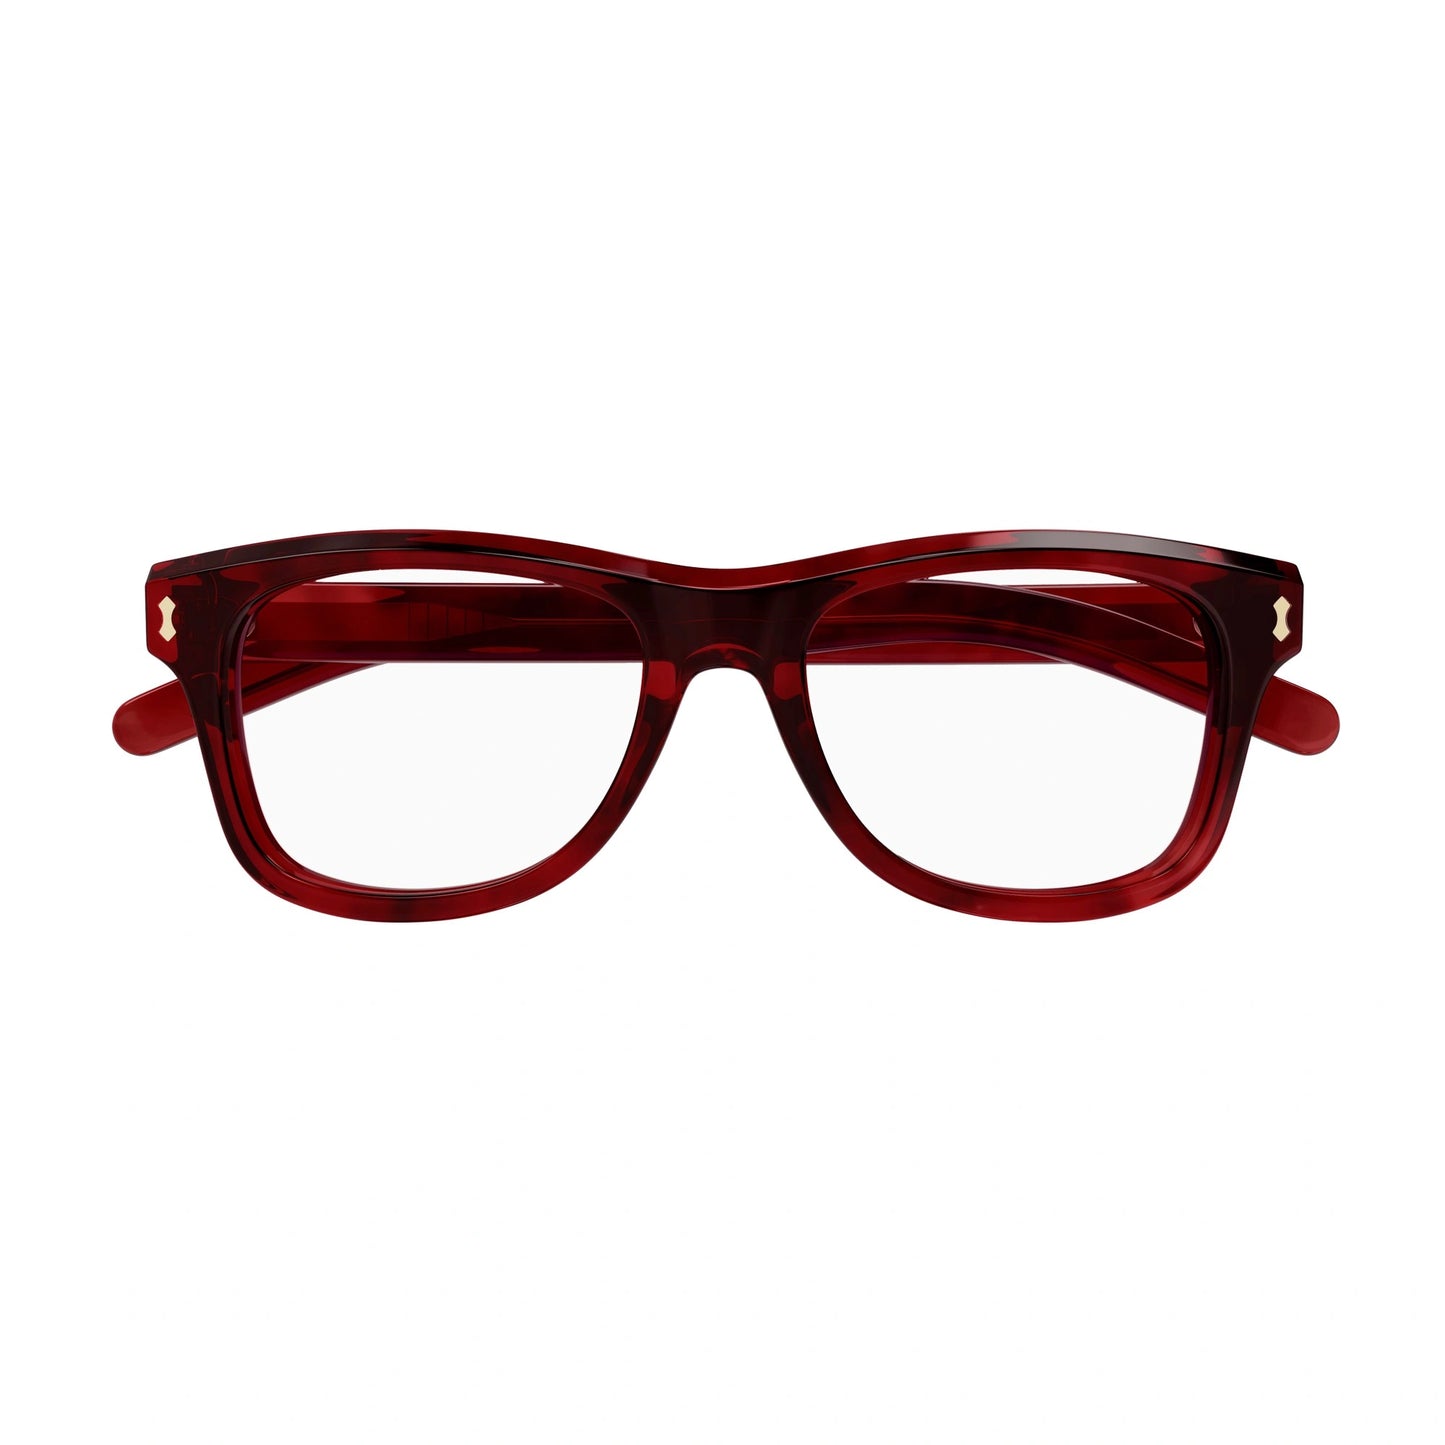 Gucci GG1526o-007 54mm New Eyeglasses